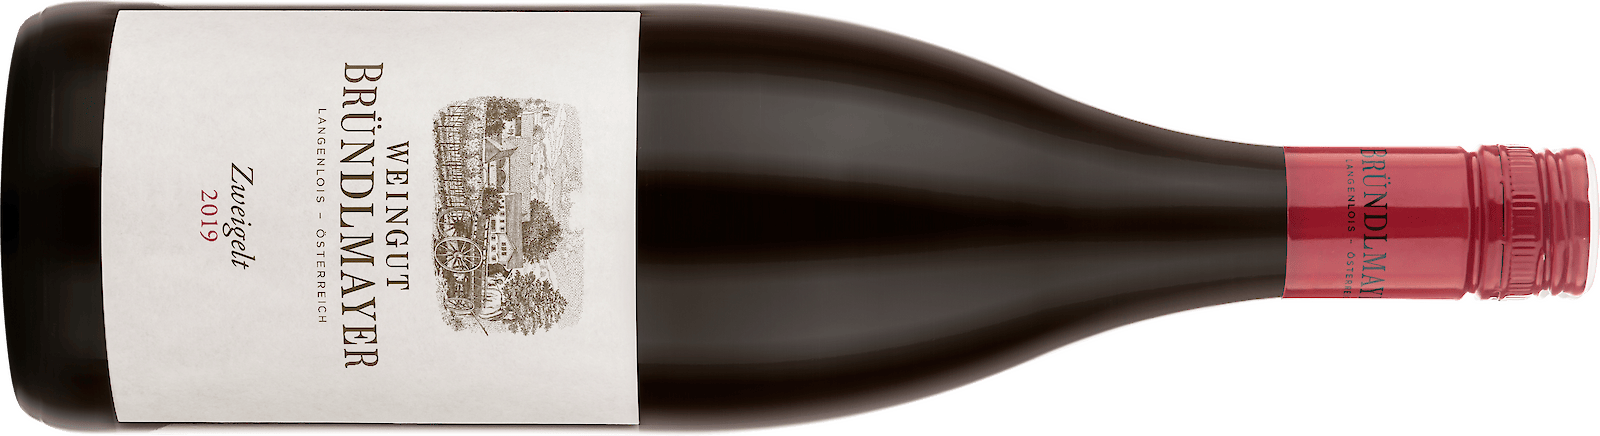 Zweigelt 2019 — Weingut Bründlmayer